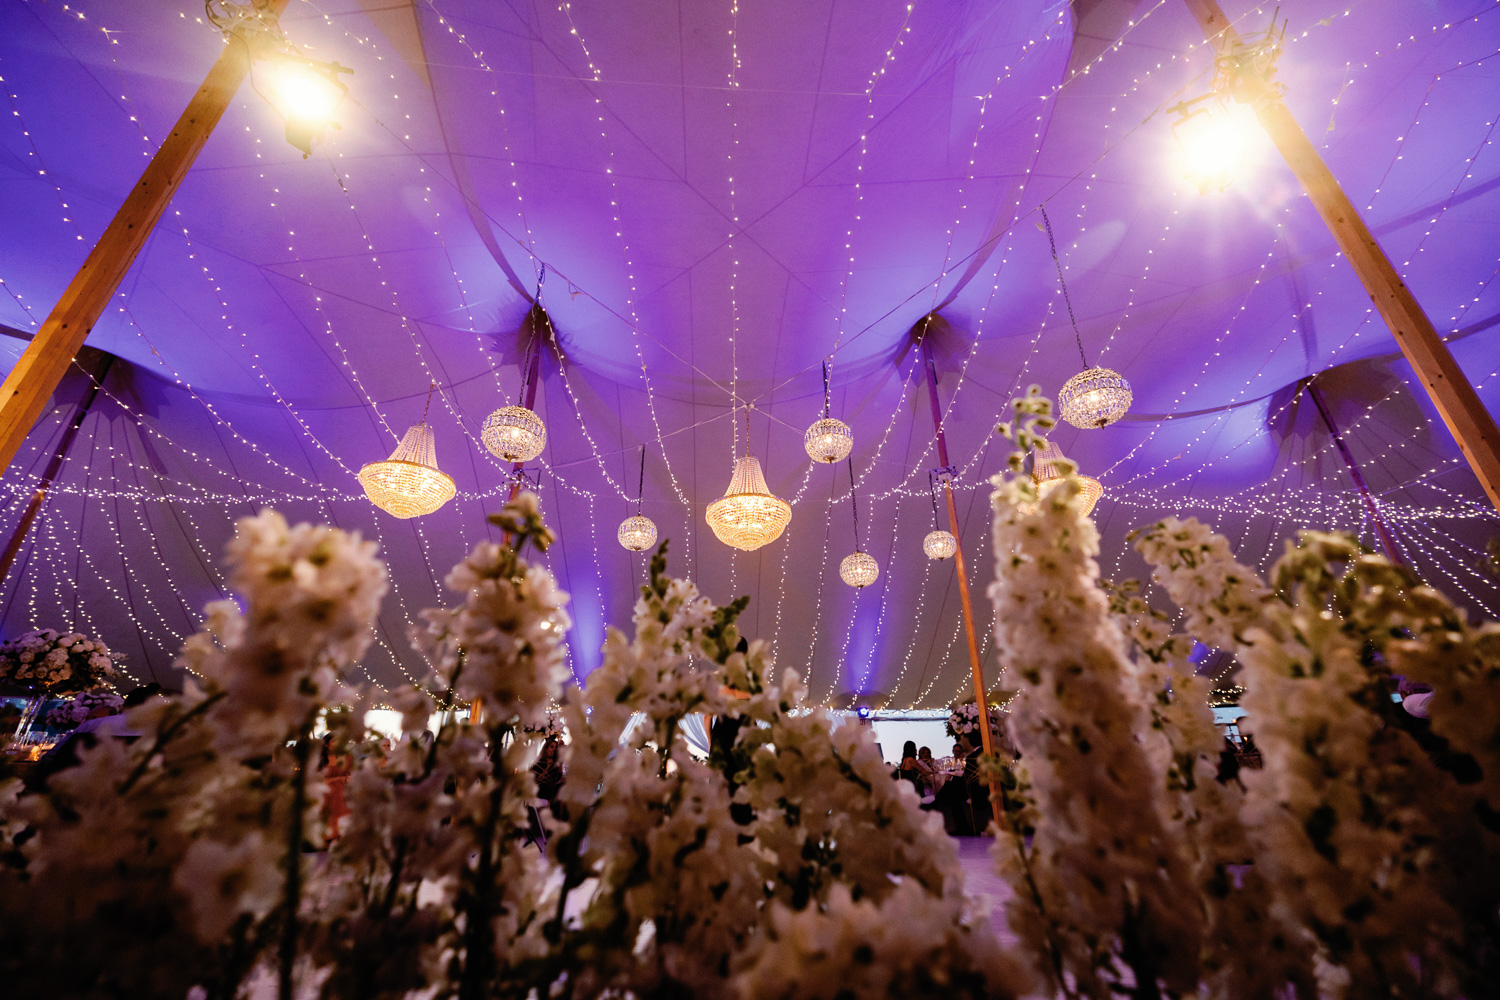 Chatham-Bars-Inn-tent-wedding-024